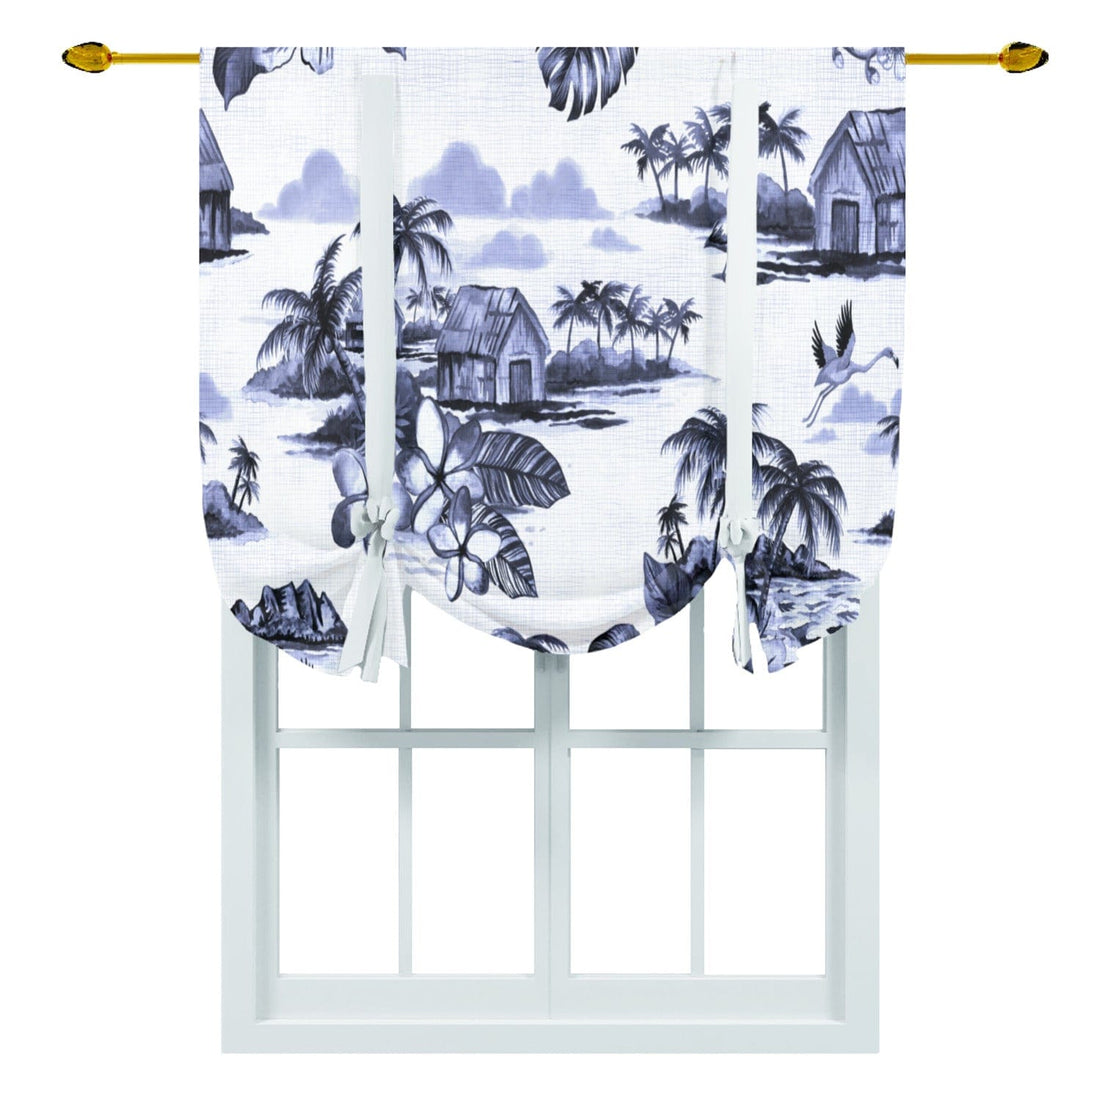 Kate McEnroe New York Tie Up Curtain in Vintage Hawaiian Tropical Island Scenes Navy BlueTie - up Curtains55755